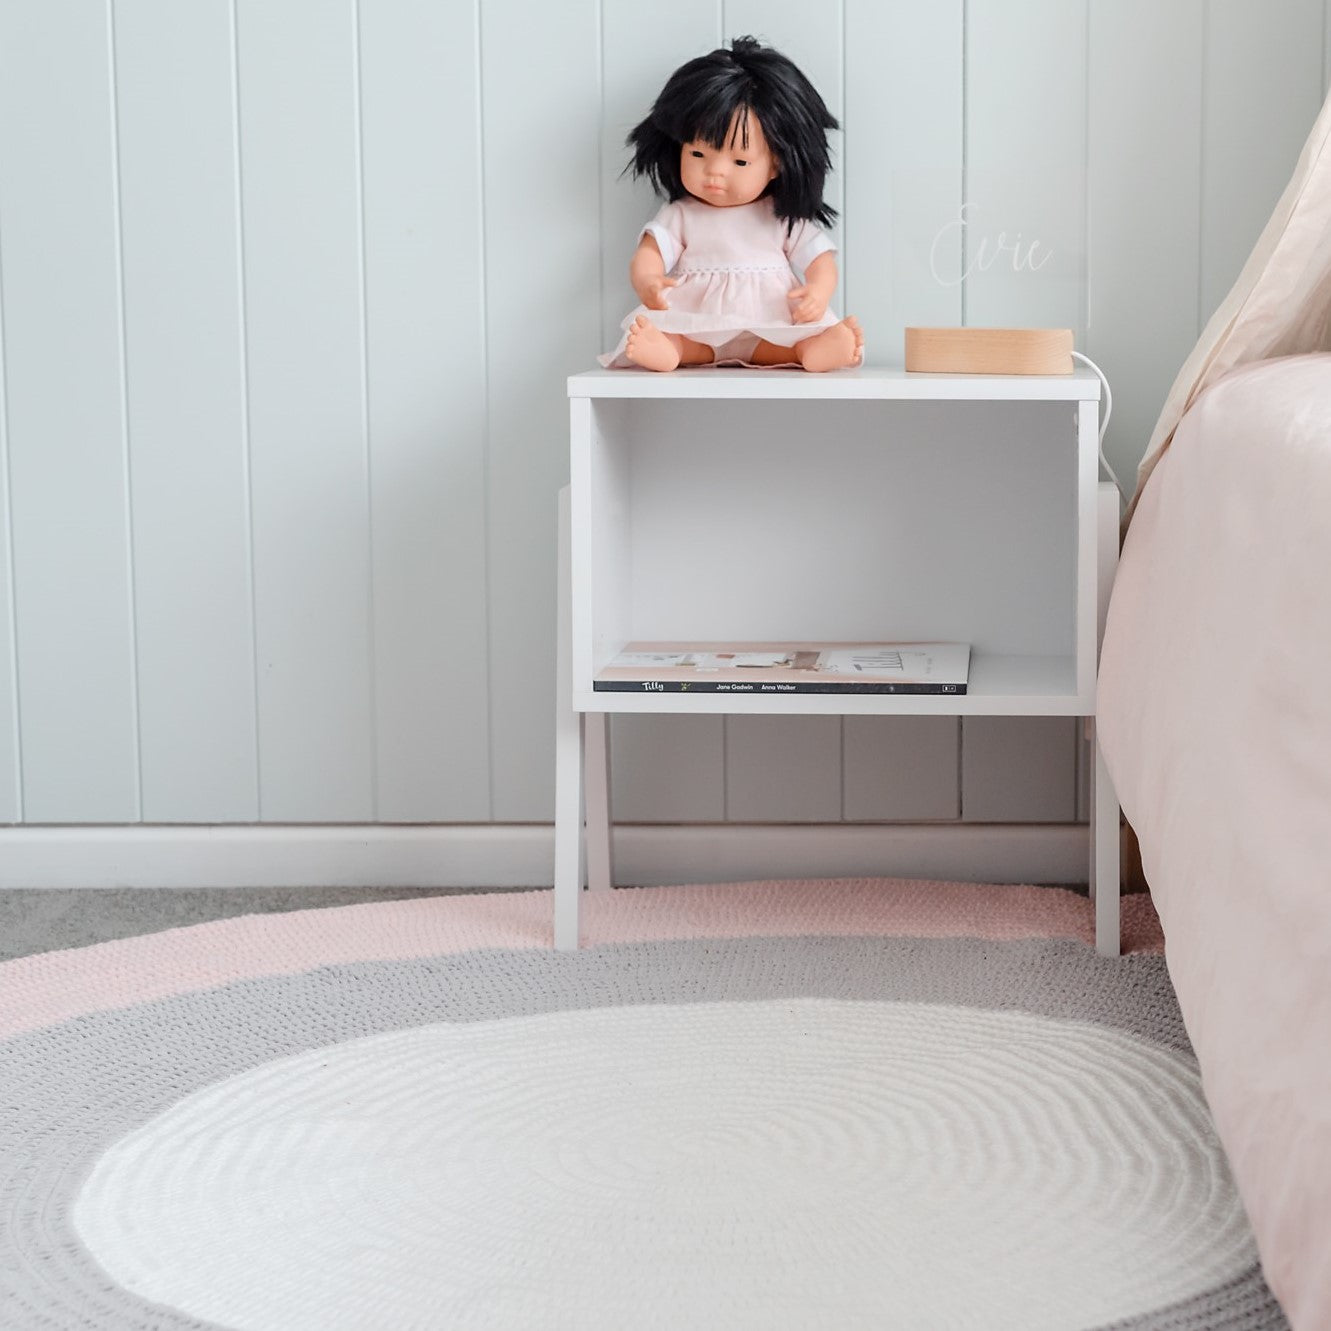 Nursery Round Crochet Rug - Pink, Grey + White